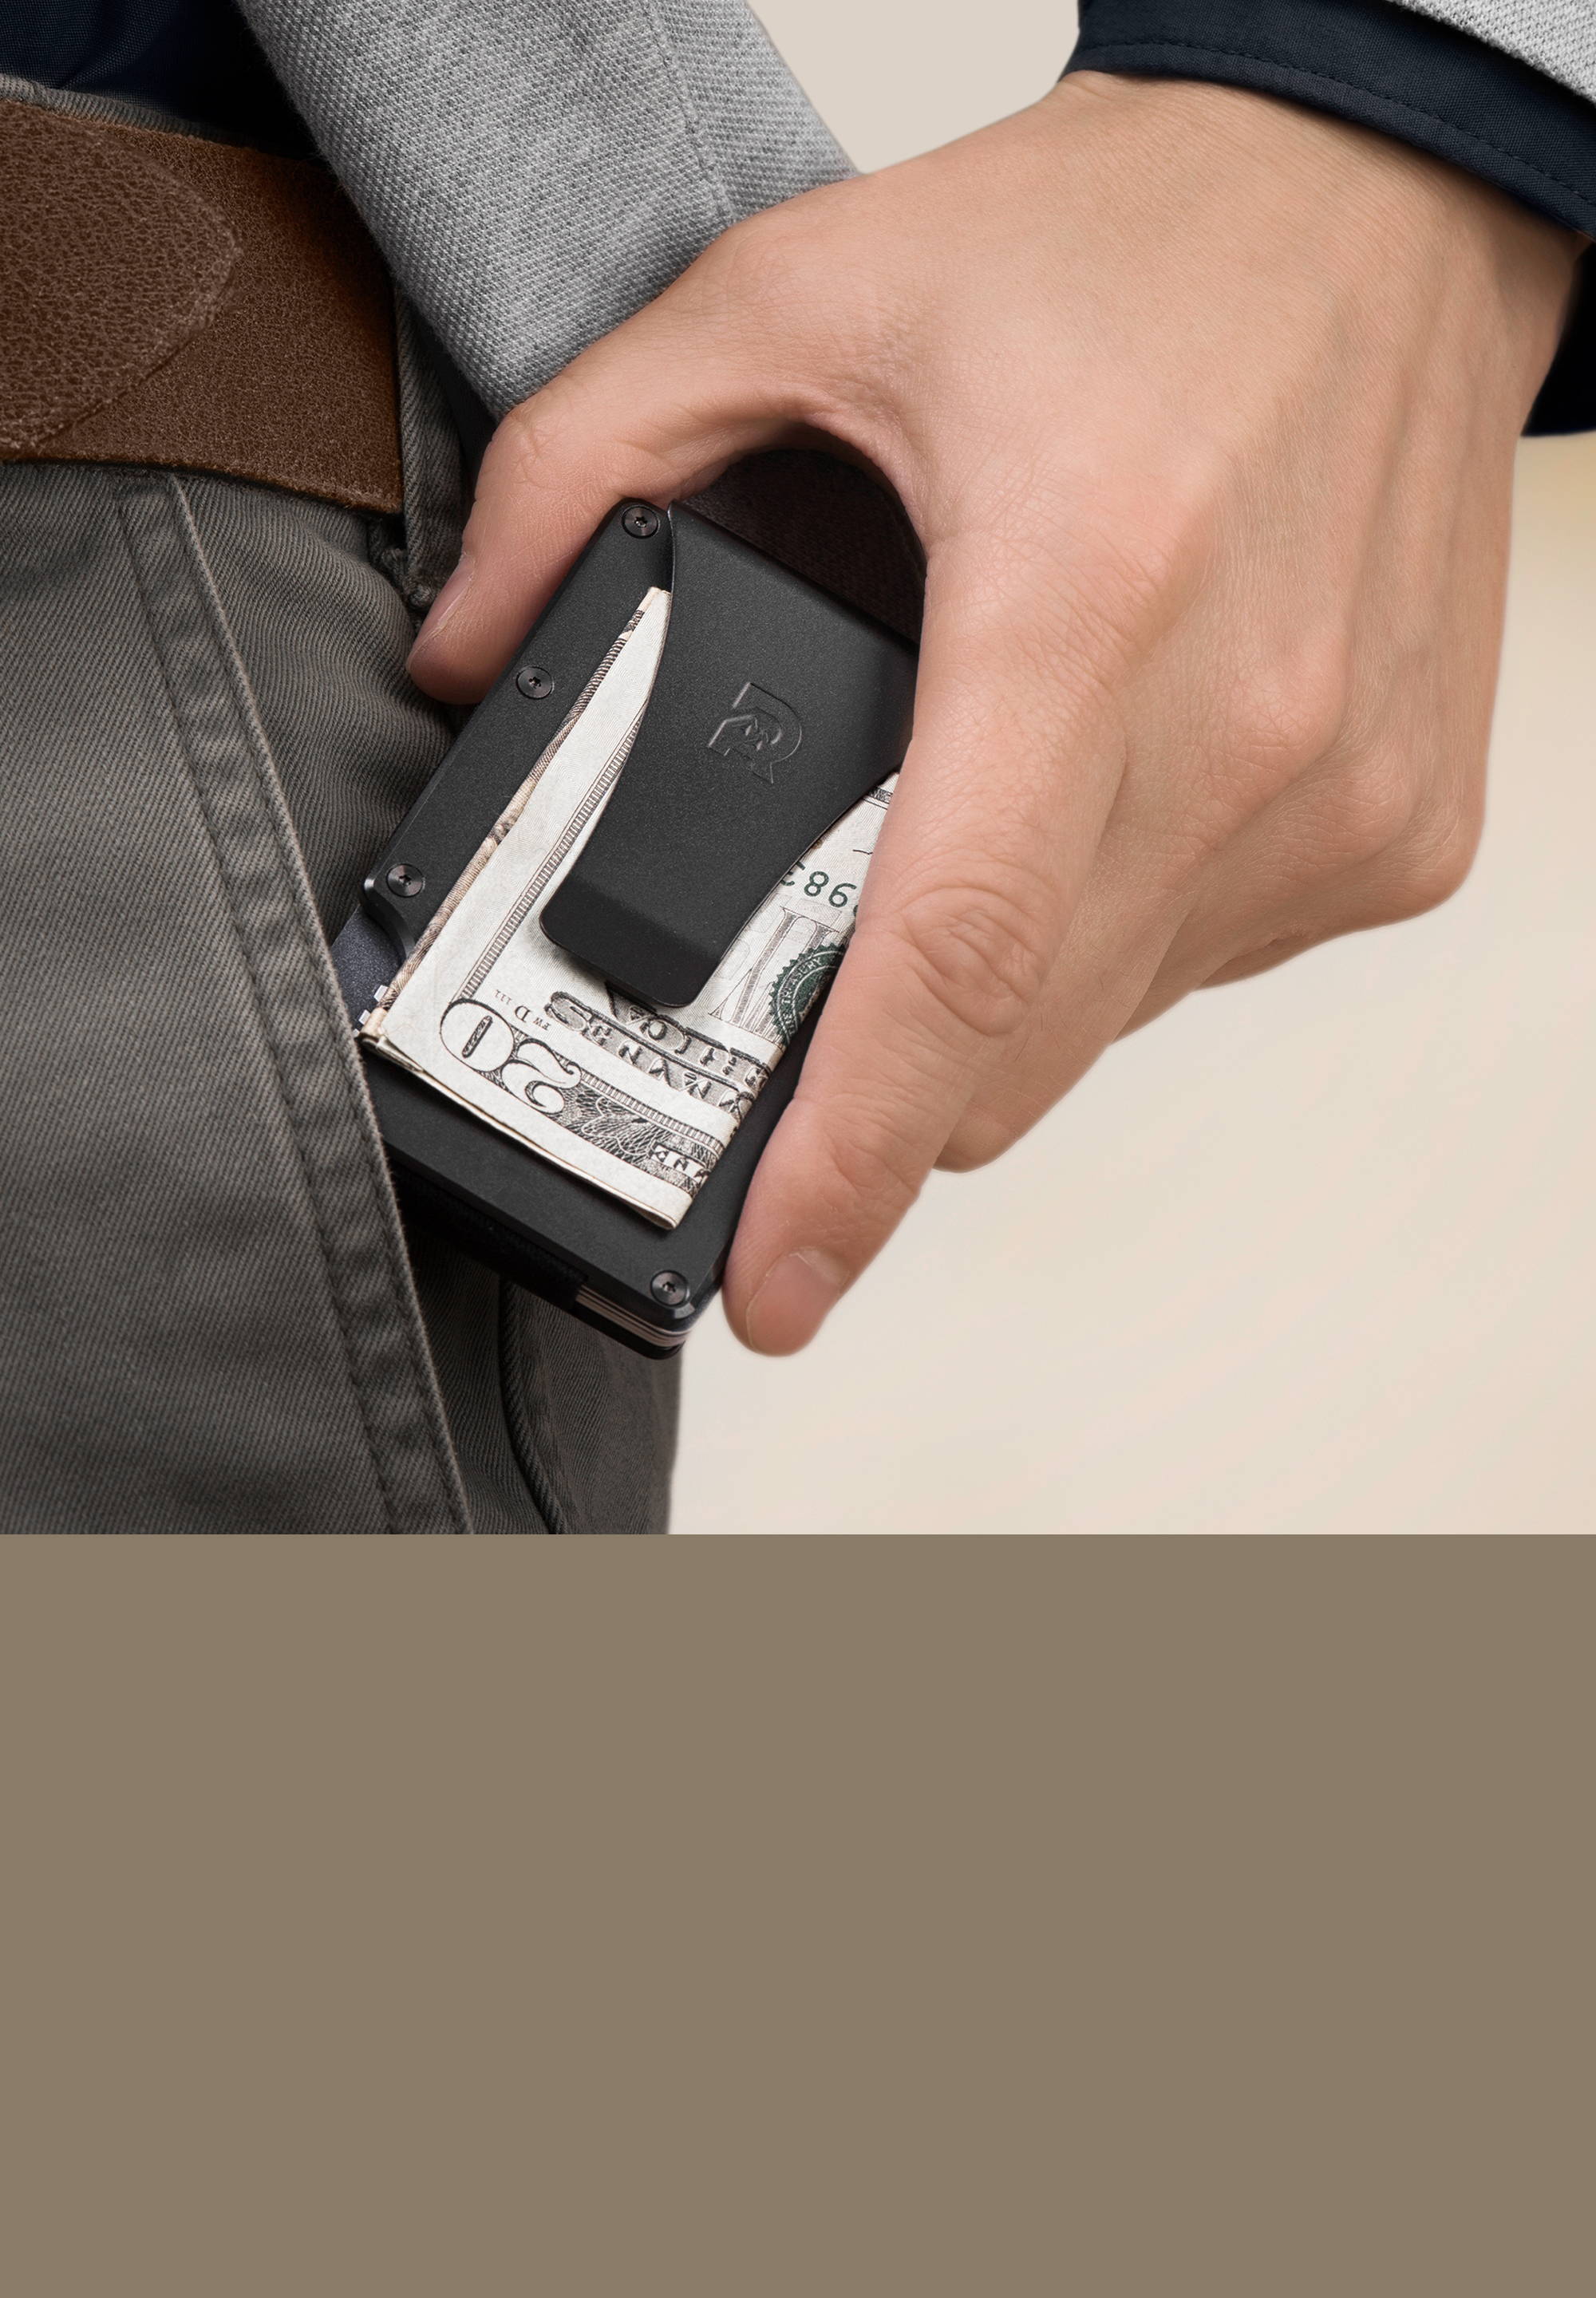 The ridge Wallet aluminio RAW Cash Strapdinero bandamonedero RFID seguro 